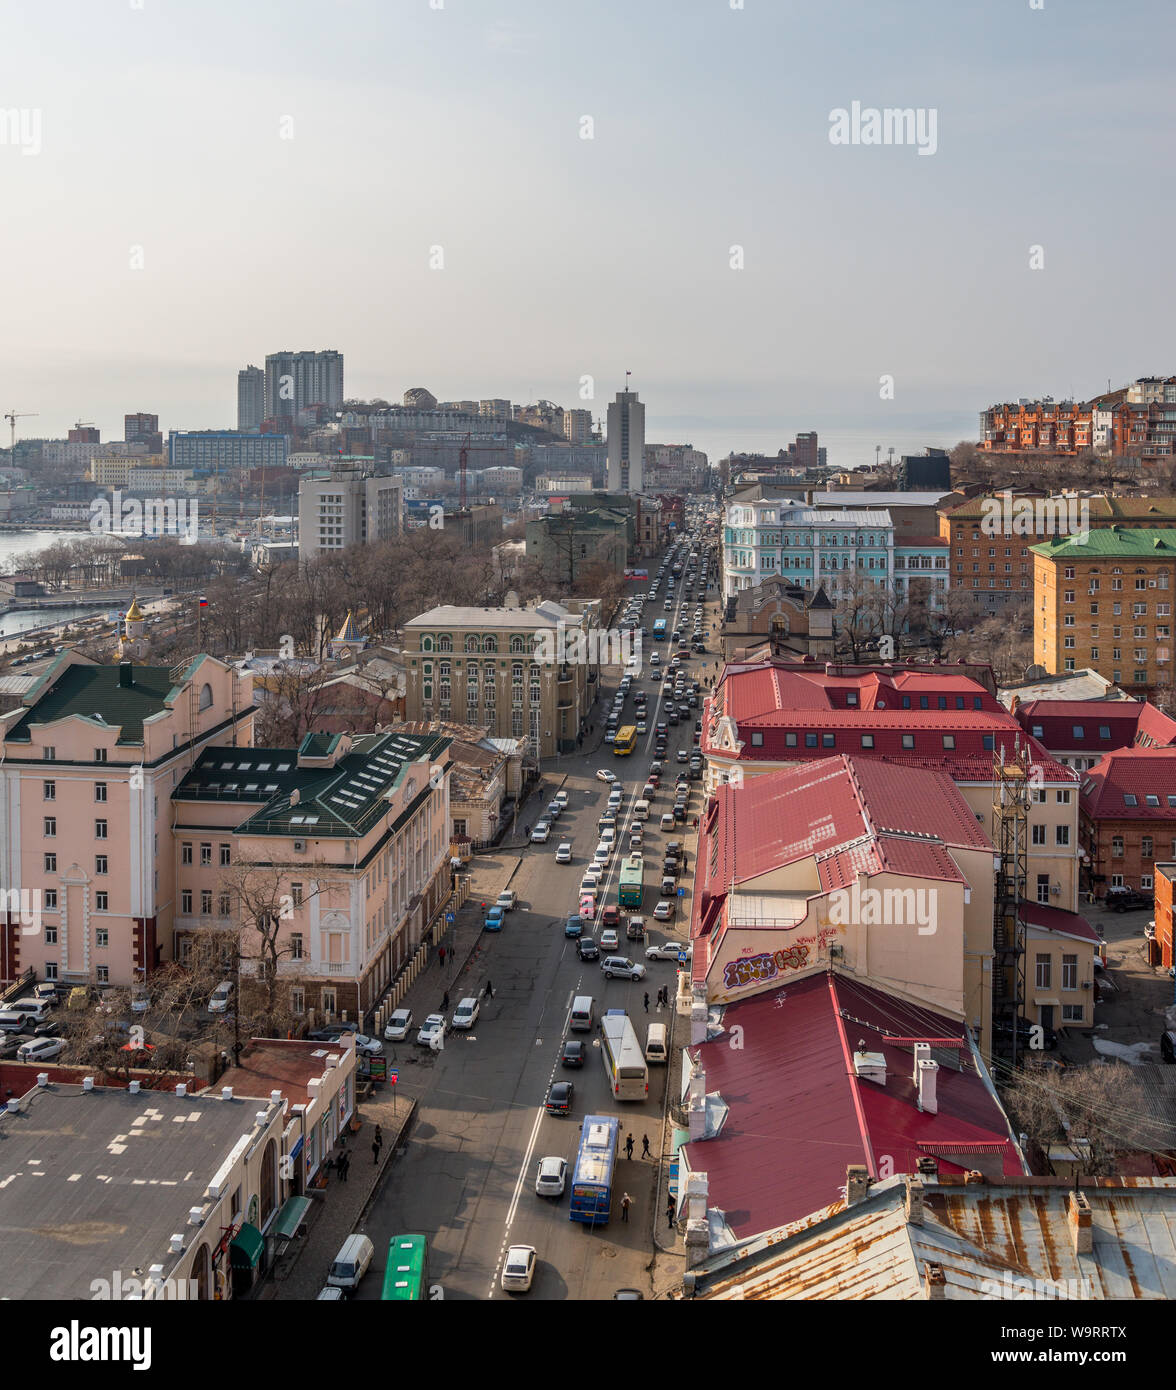 VLADIVOSTOK, RUSSIE - 25 février 2015 : Svetlanskaya Street view. Svetlanskaya Street est une grande rue à Vladivostok, en Russie. Banque D'Images